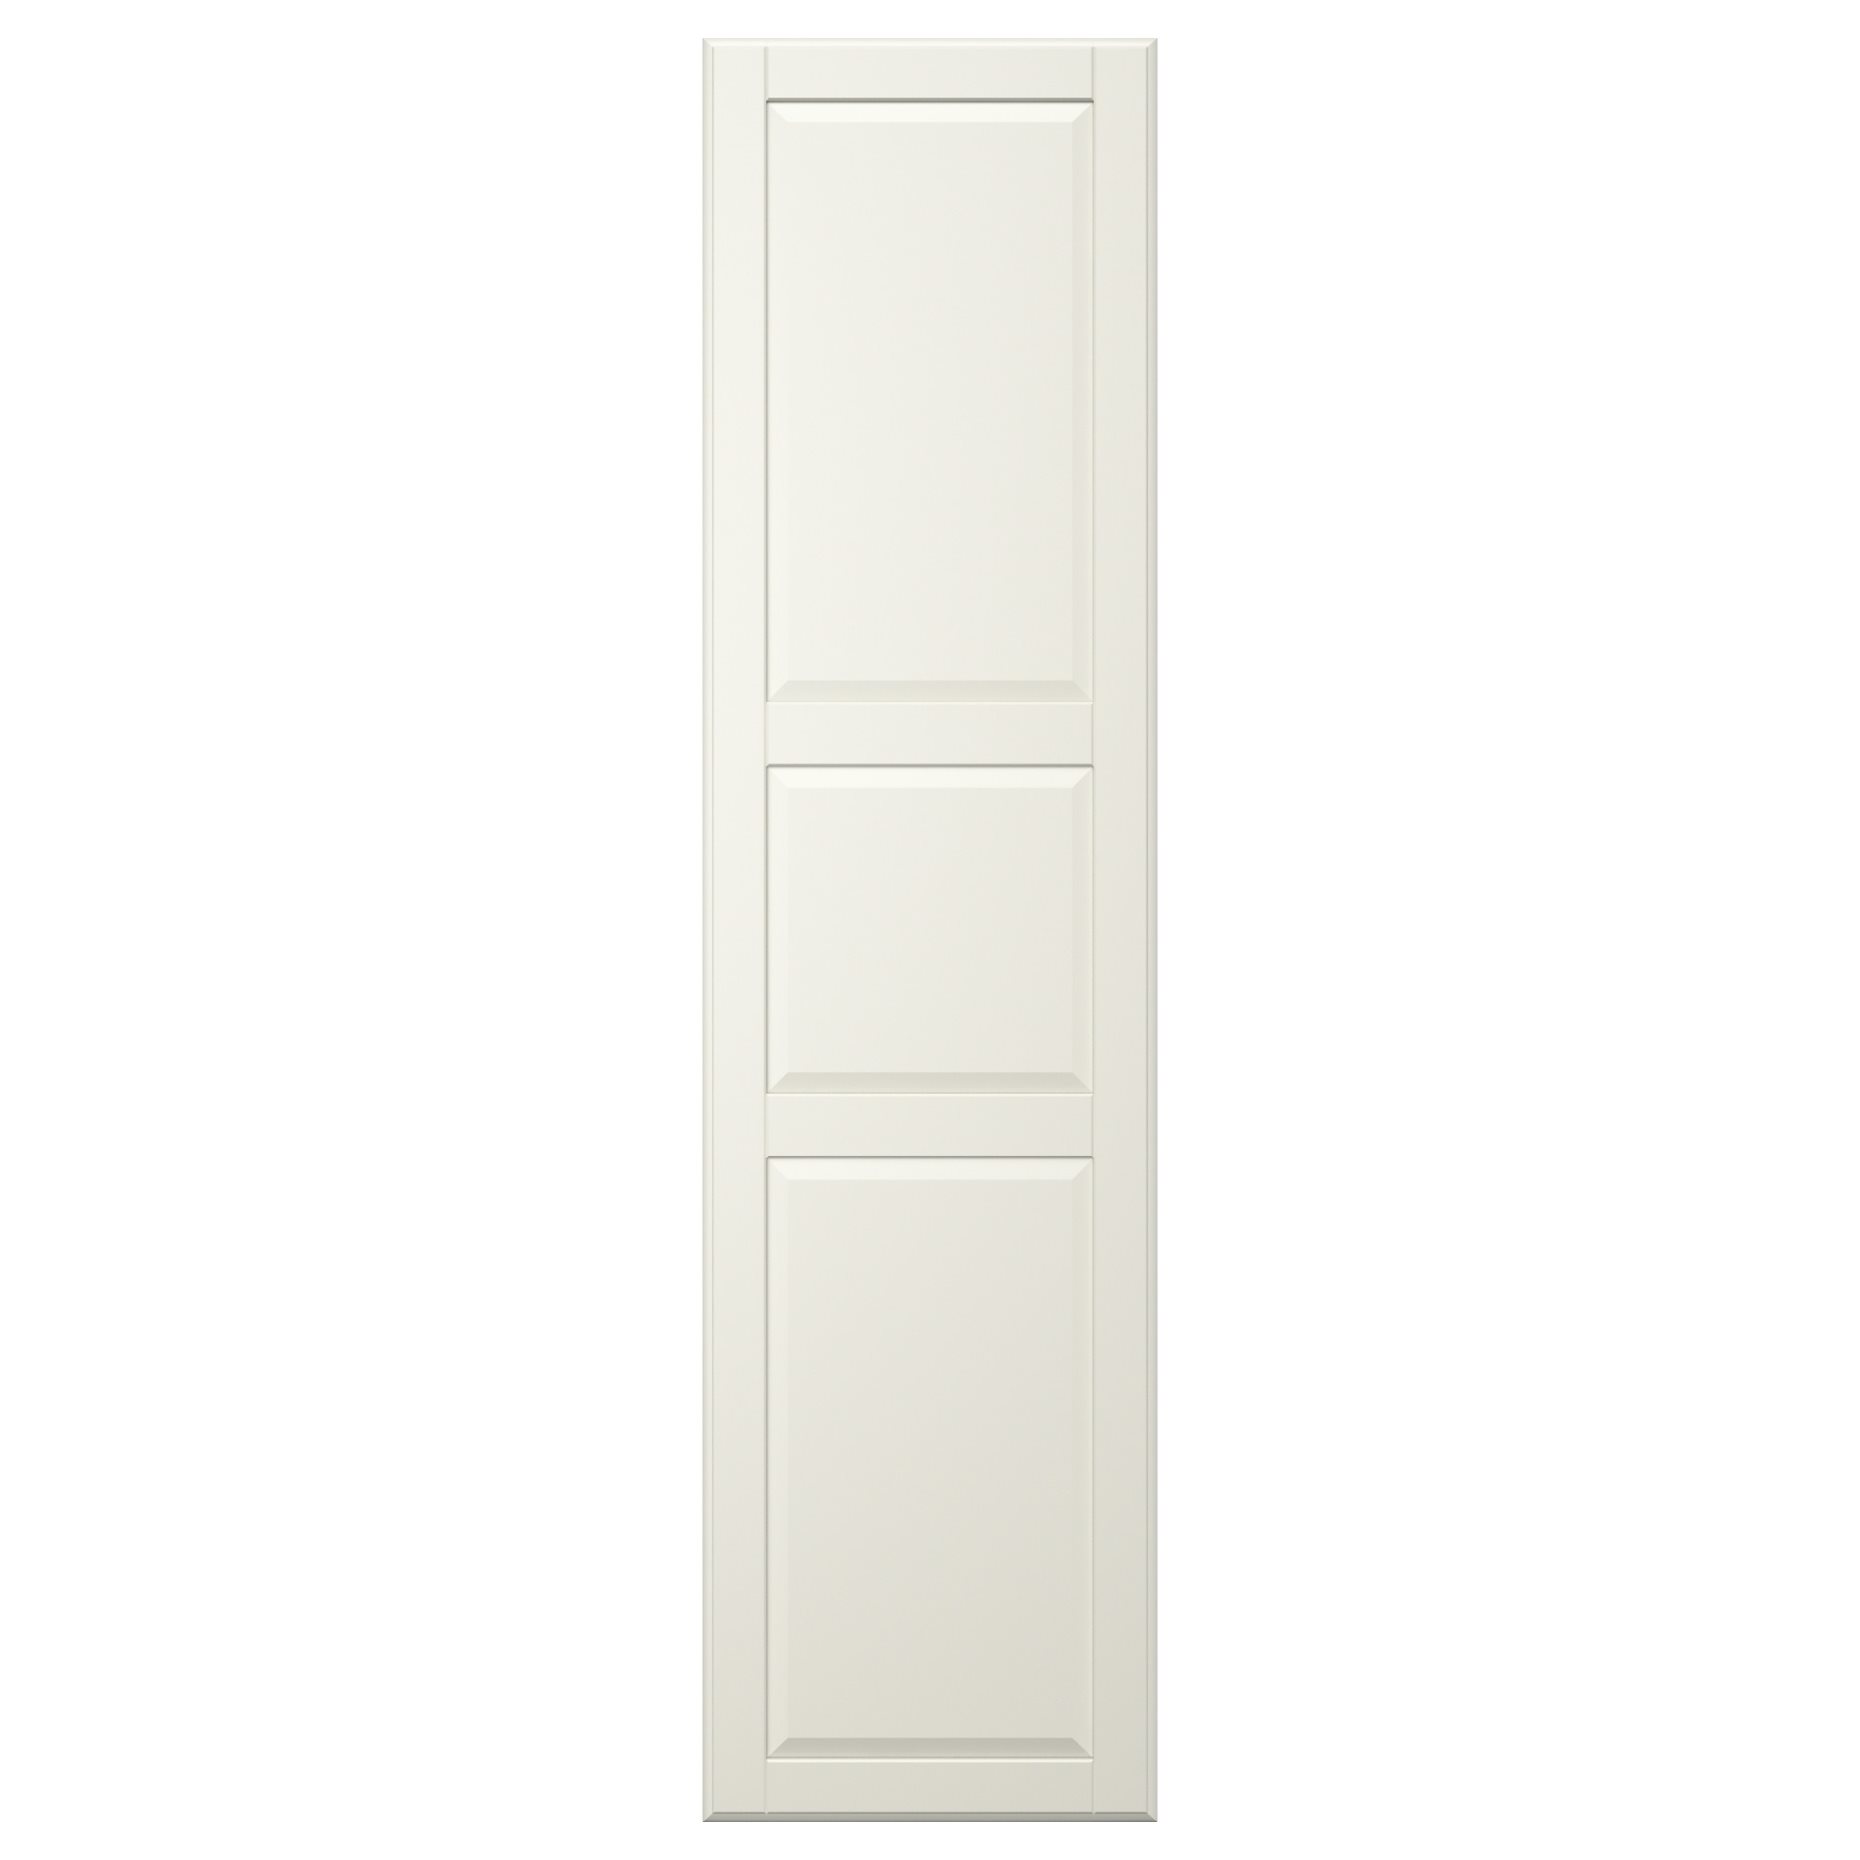 TYSSEDAL, πόρτα με μεντεσέδες, 50x195 cm, 390.902.50